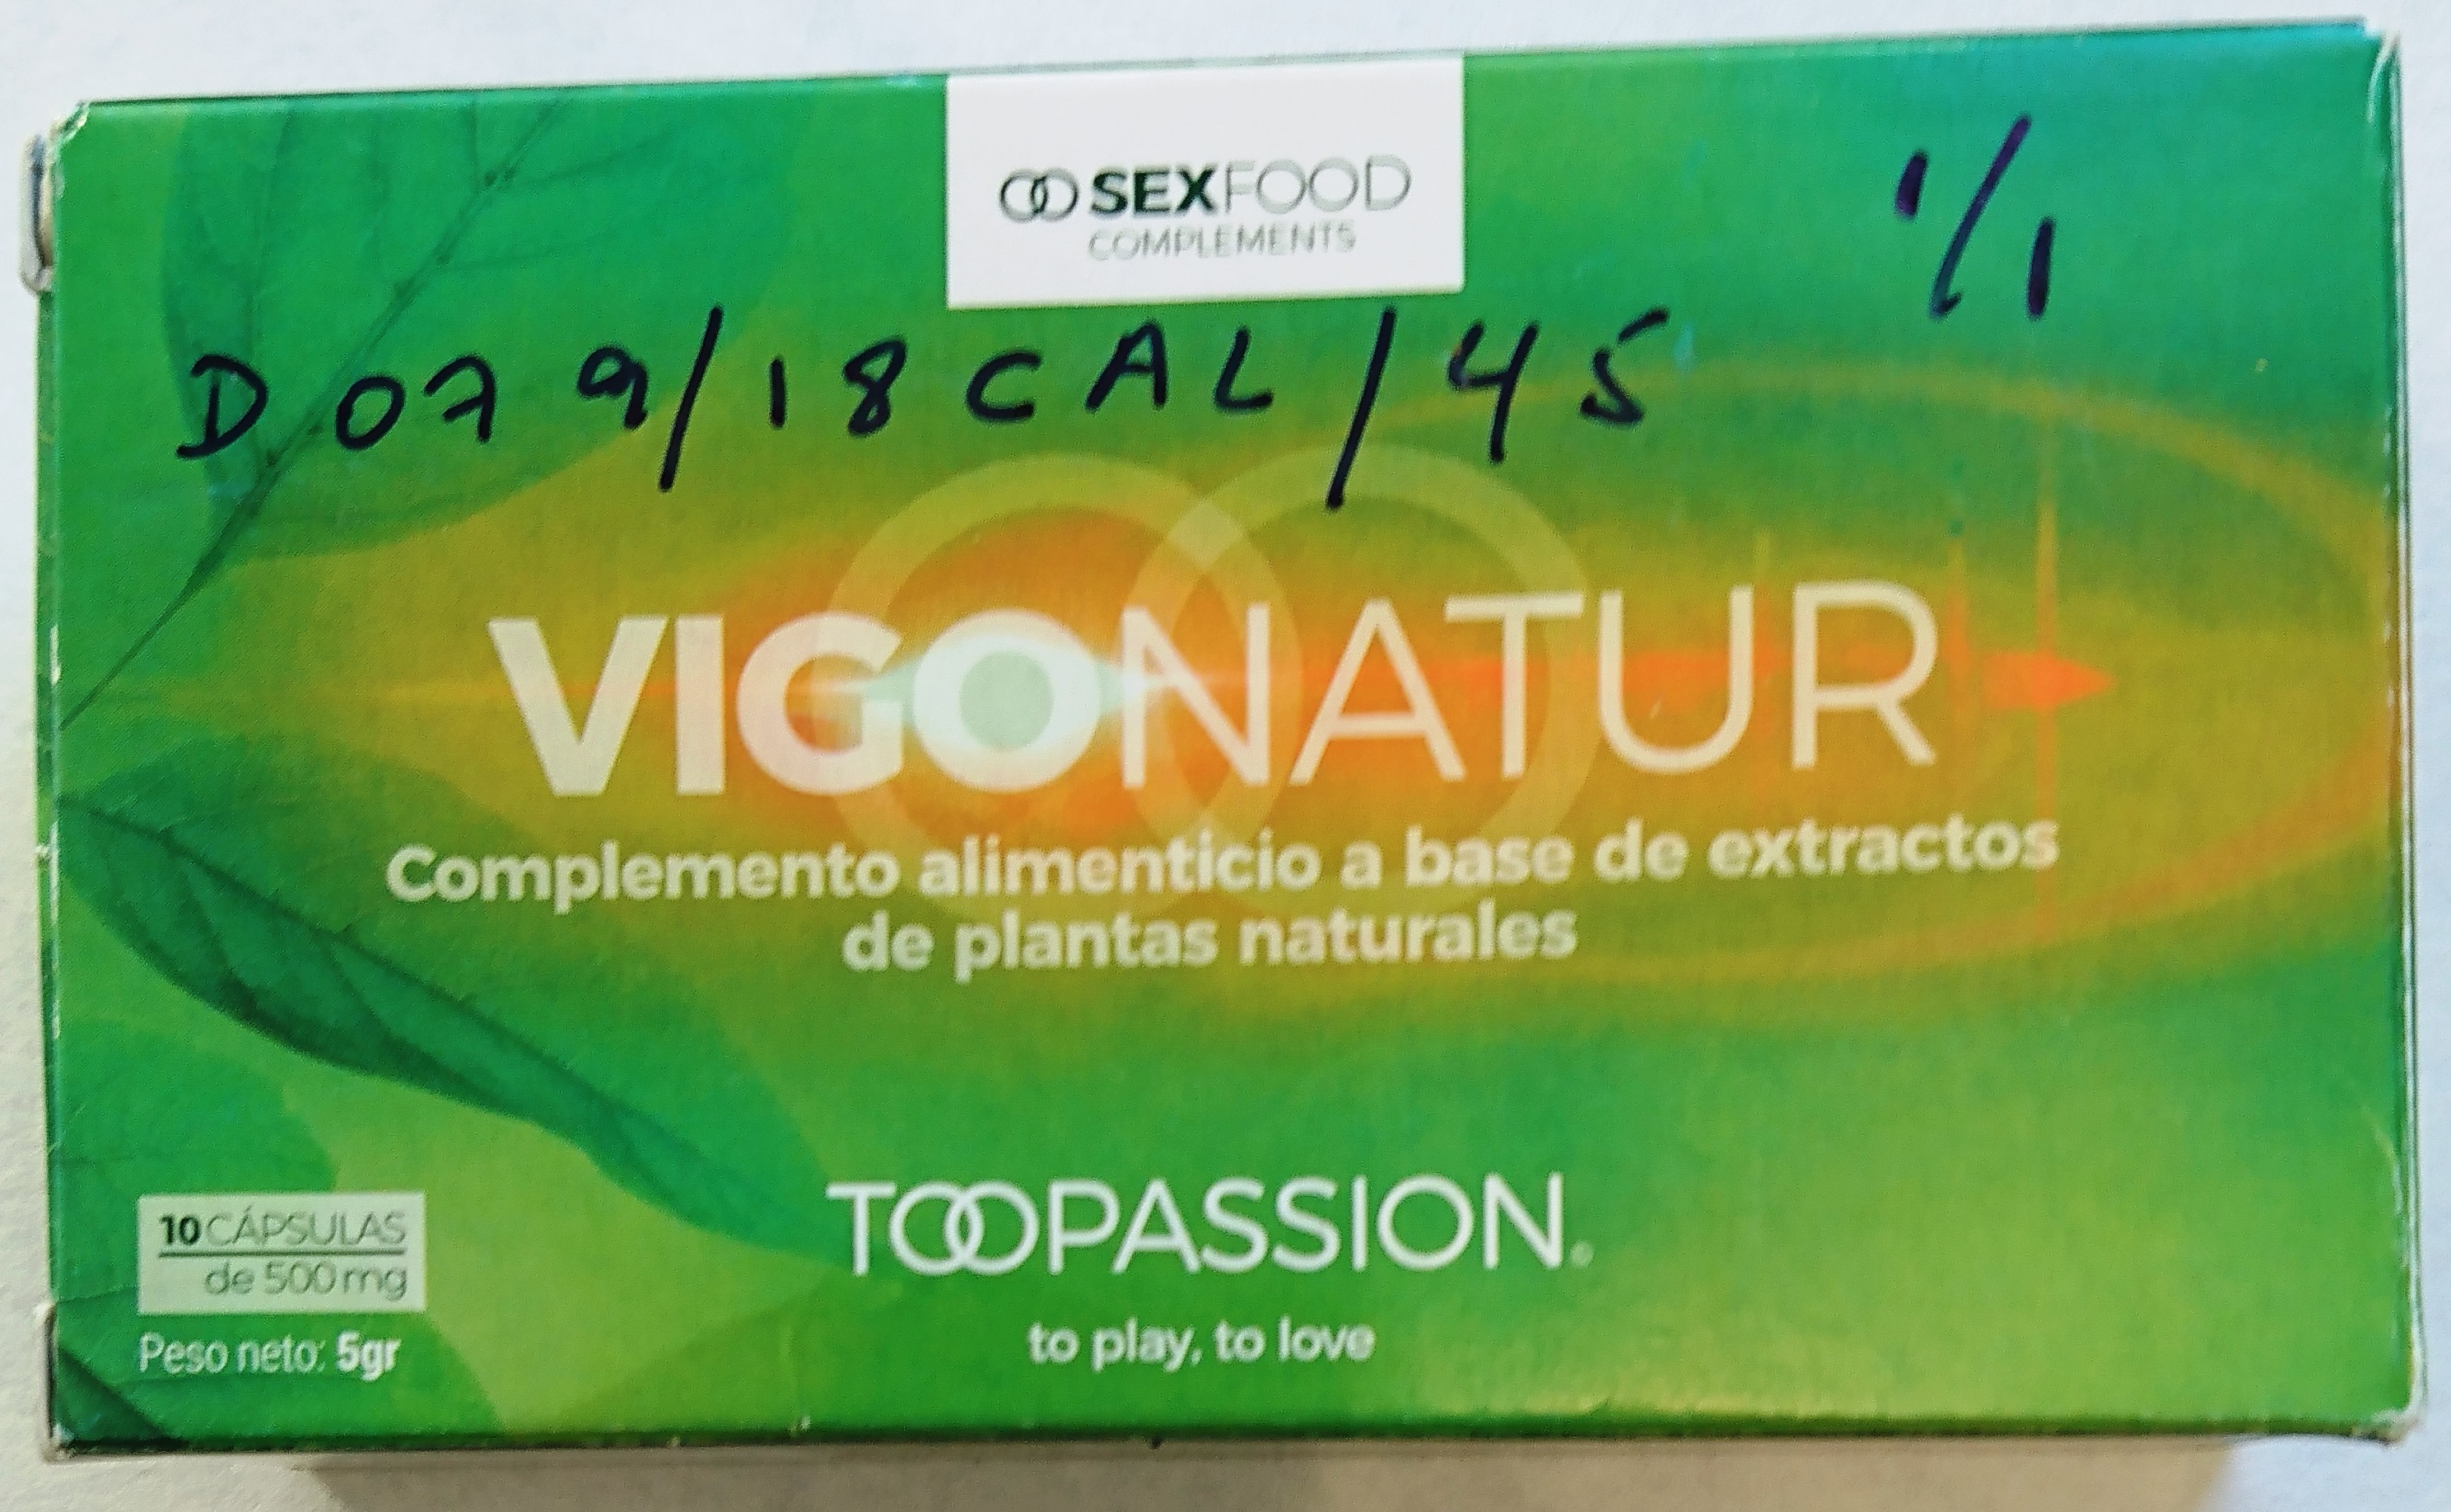 Image of the illigal product: Vigonatur